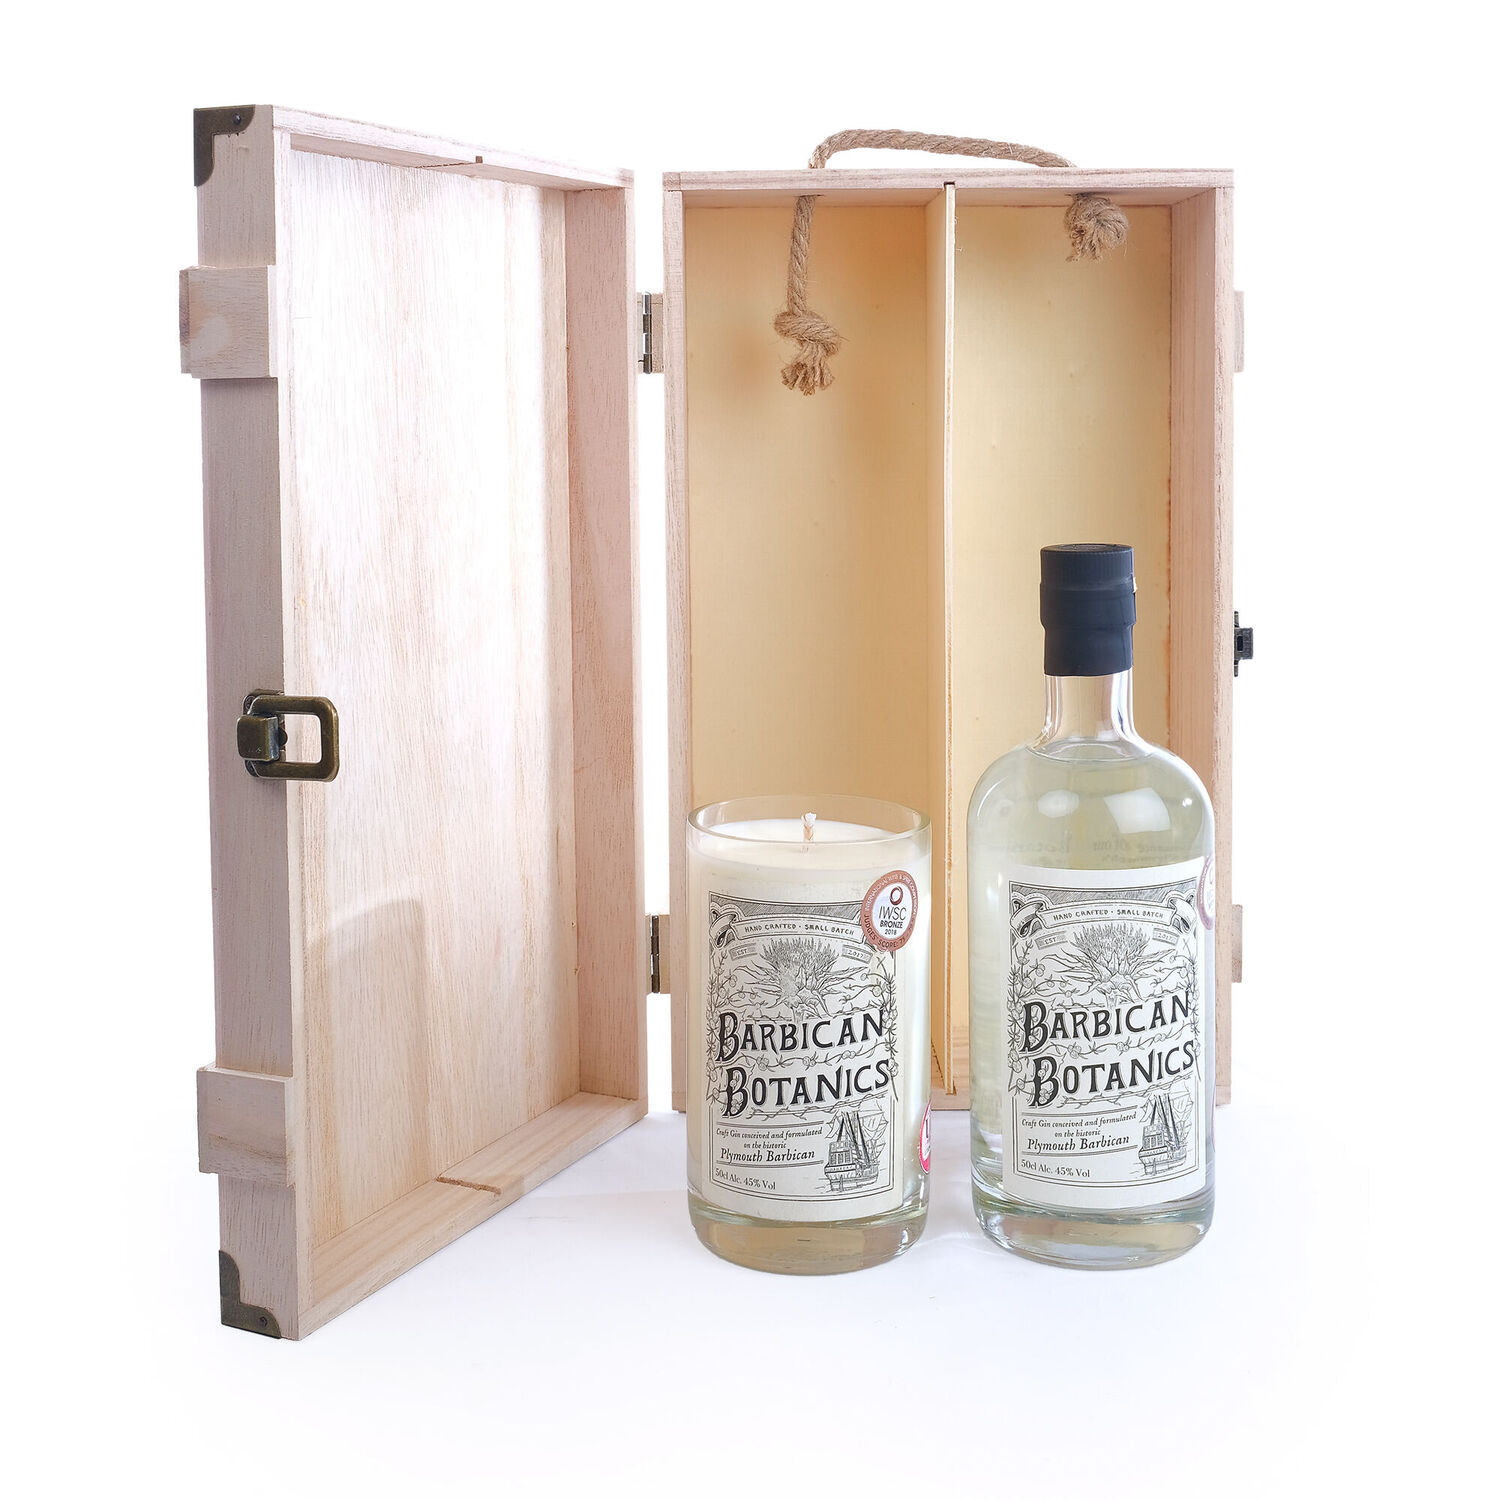 Barbican Botanics Gin & Candle Gift Box from